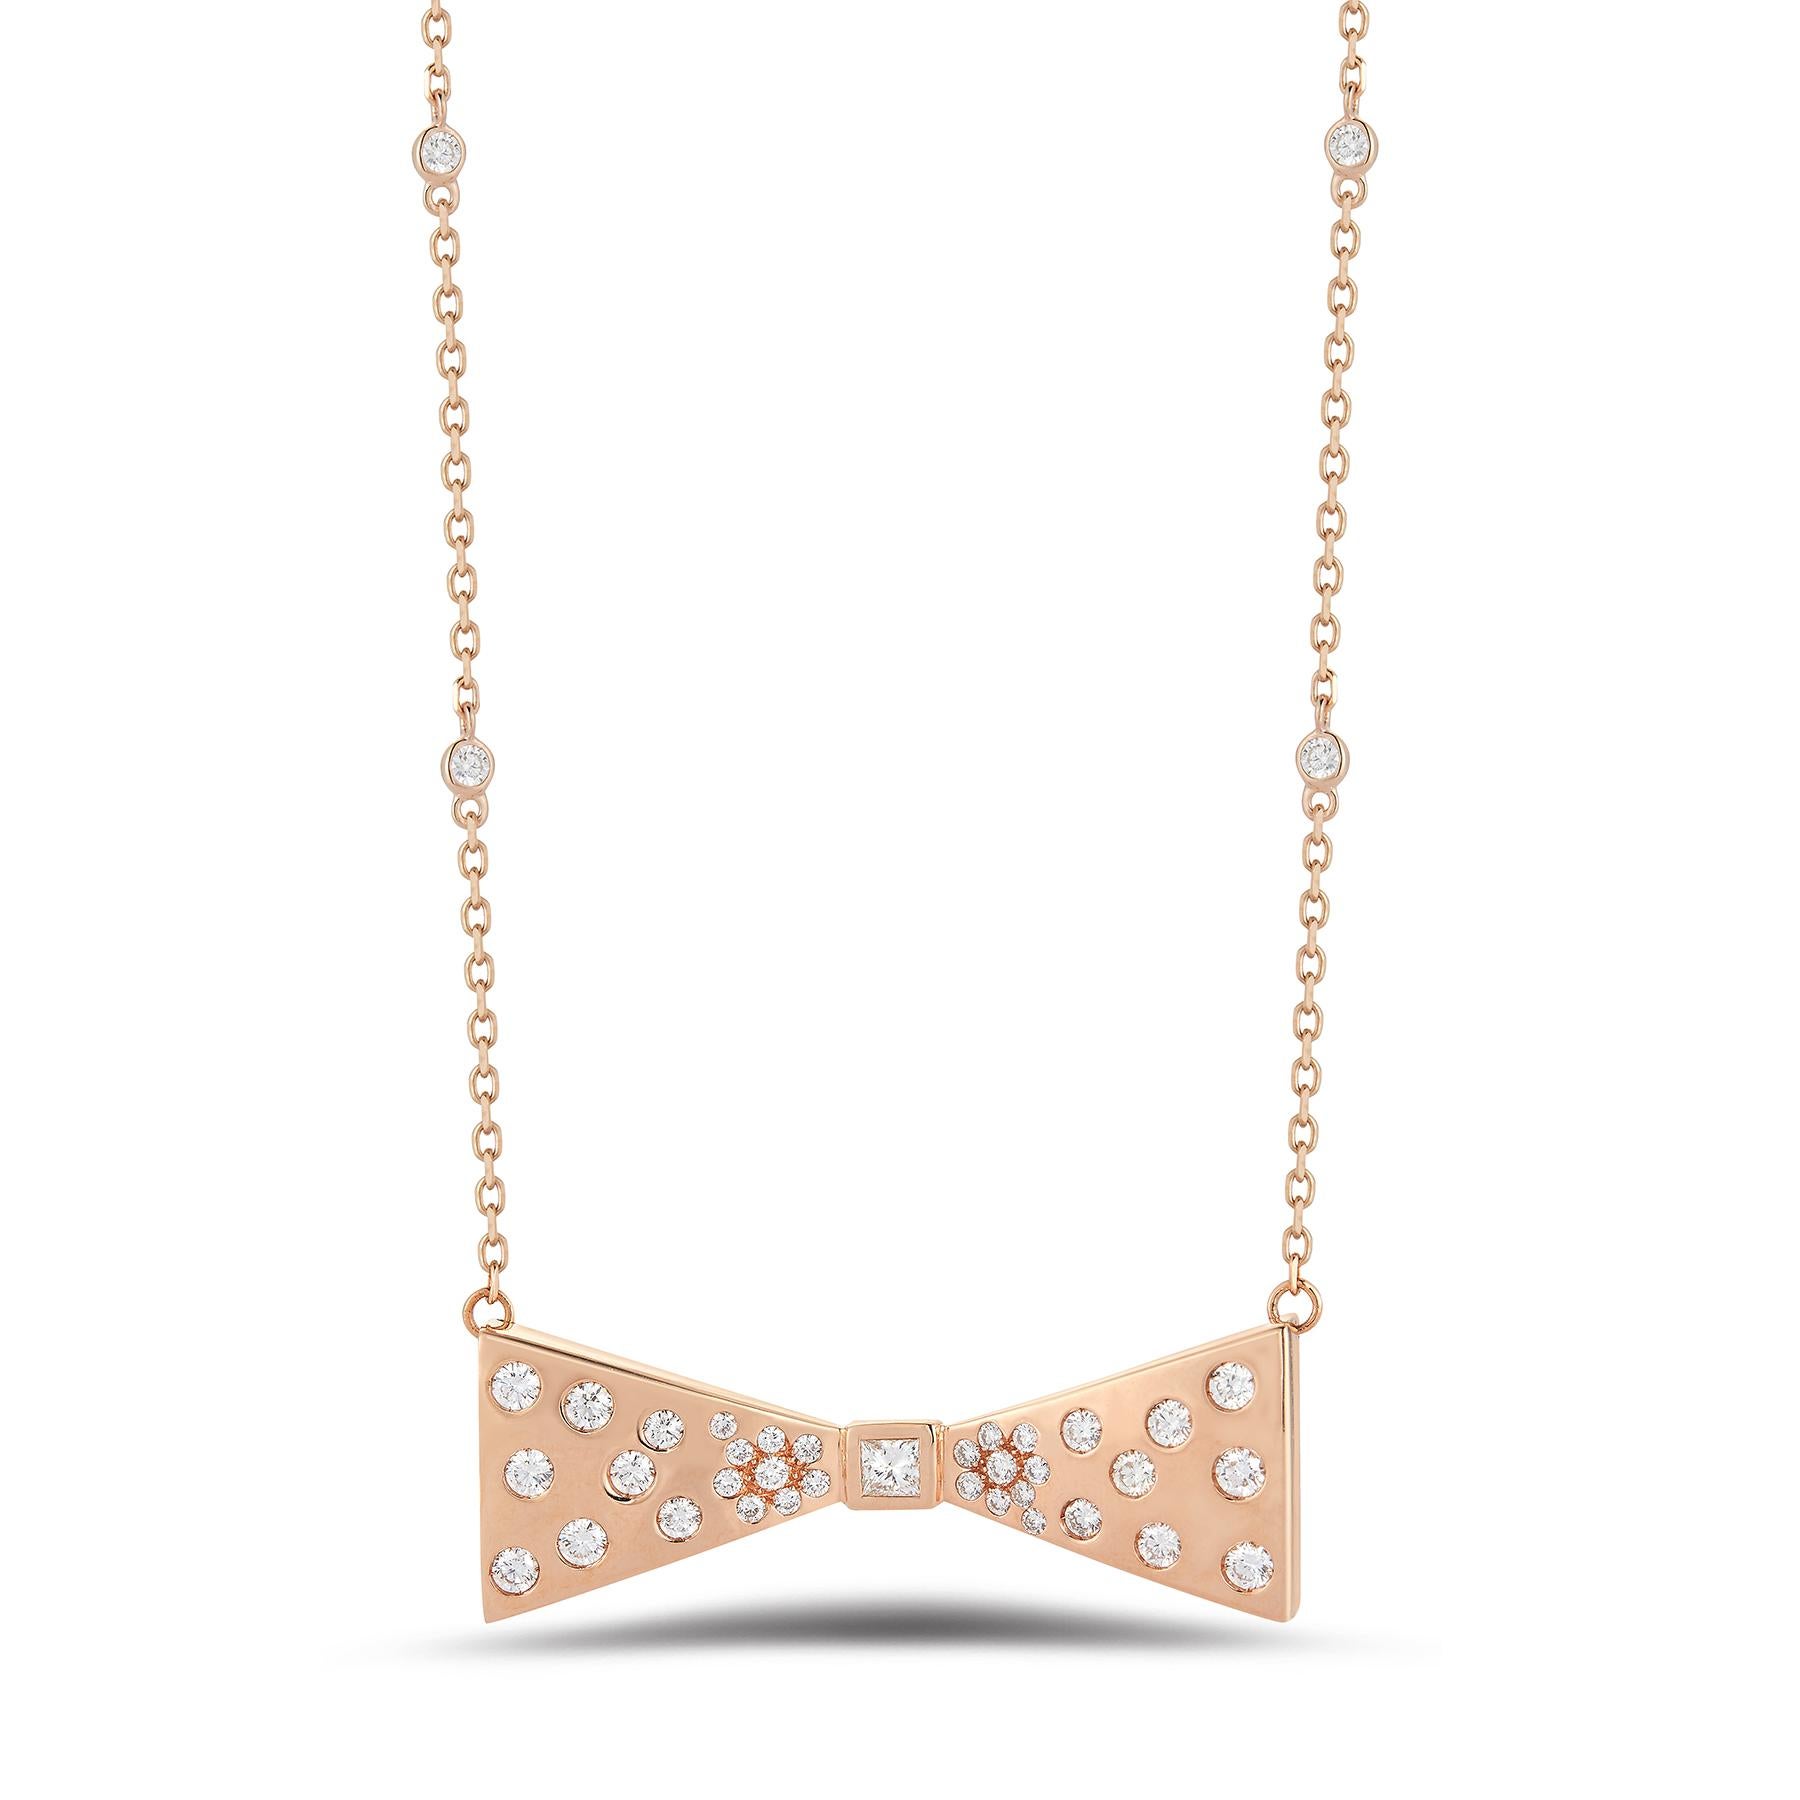 Princess Cut 18 Karat Pink Gold Necklace with Diamond-Embellished Bow